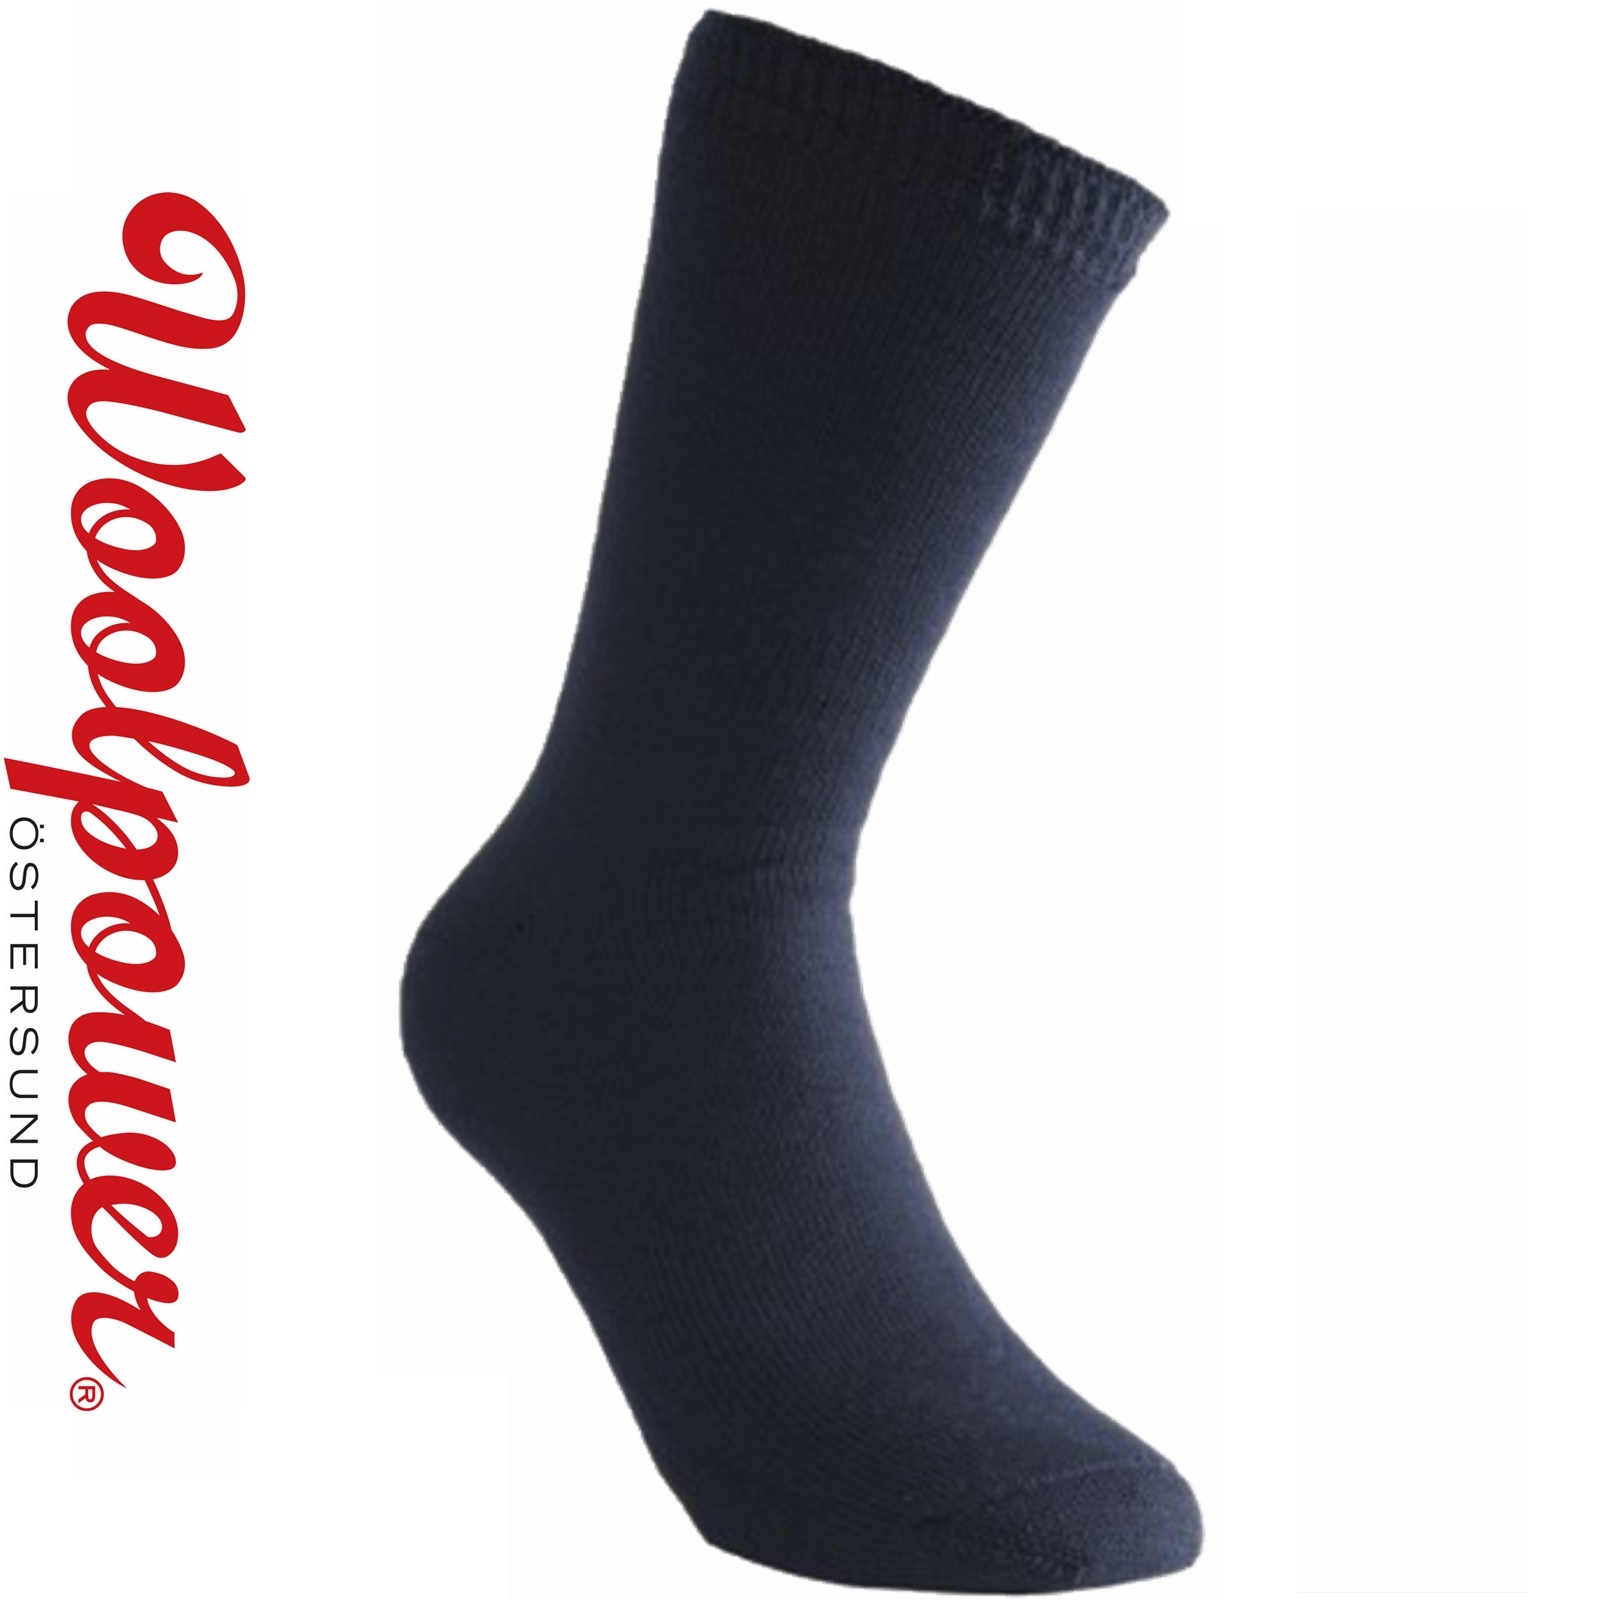 Woolpower socks 600g/m2 - black